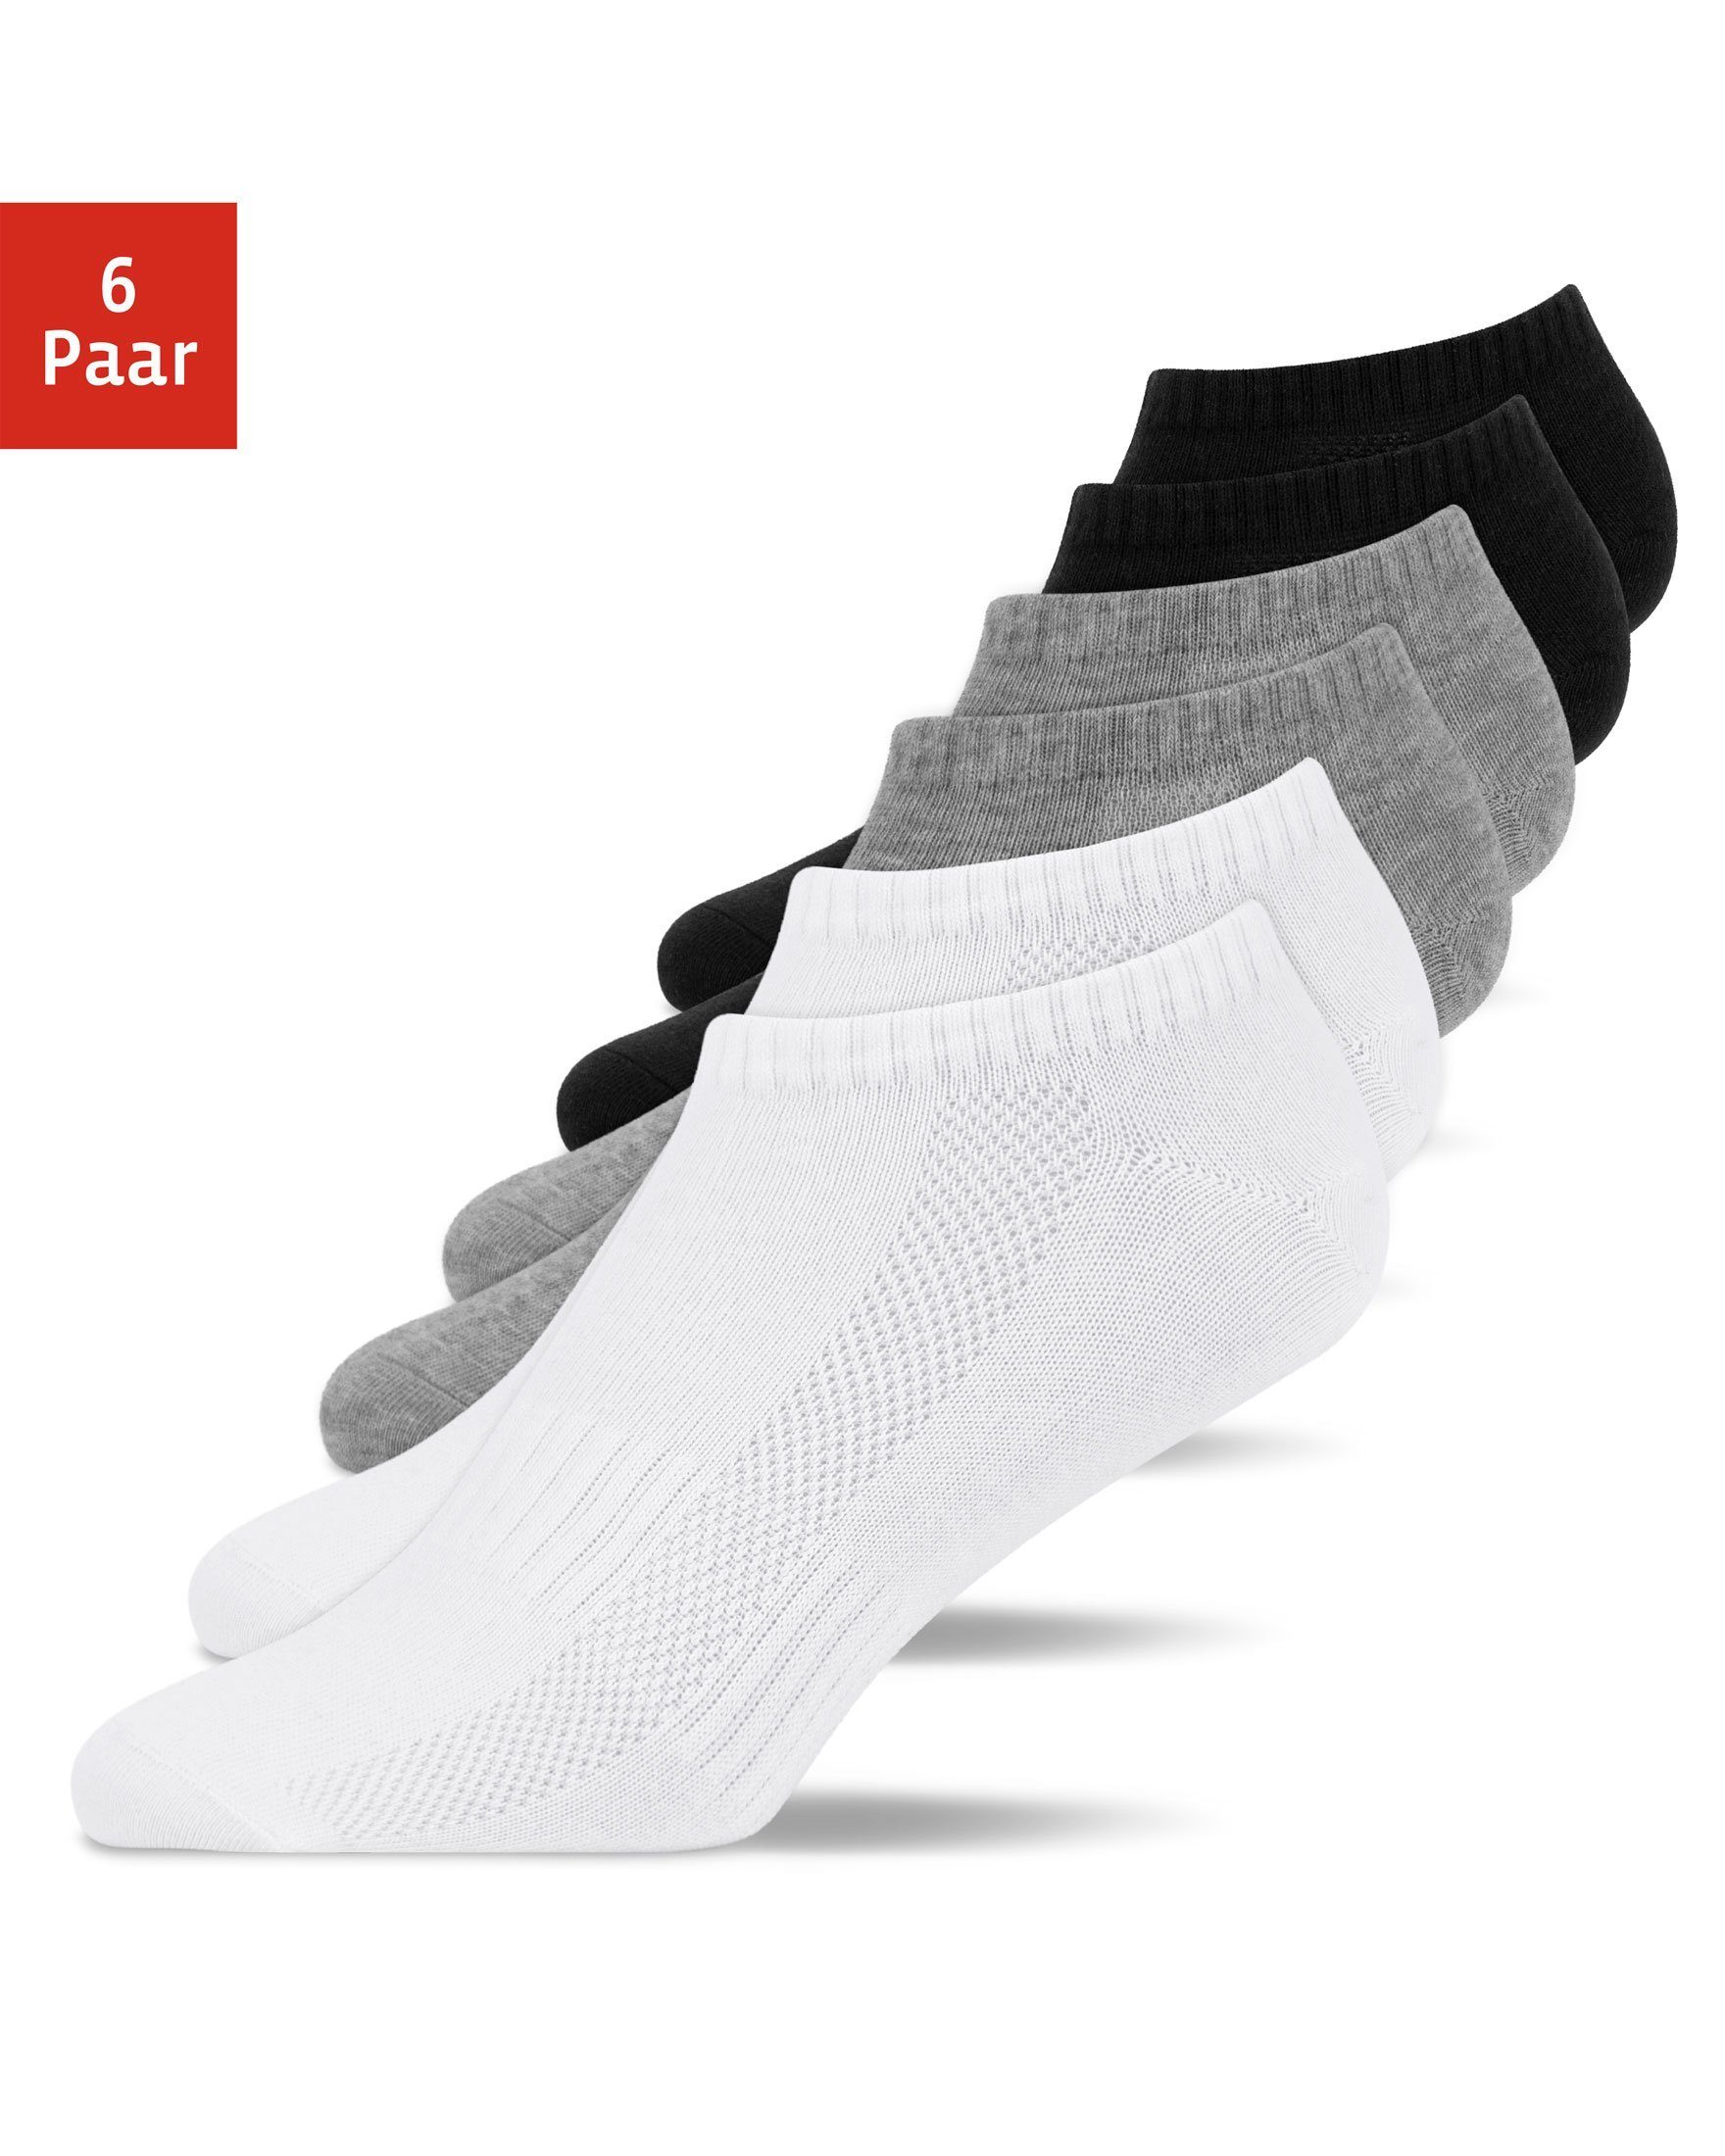 Sneaker Socken 6 Paar gekämmte Baumwolle schwarz o weiß Kurzsocken 35-38 bis 46 